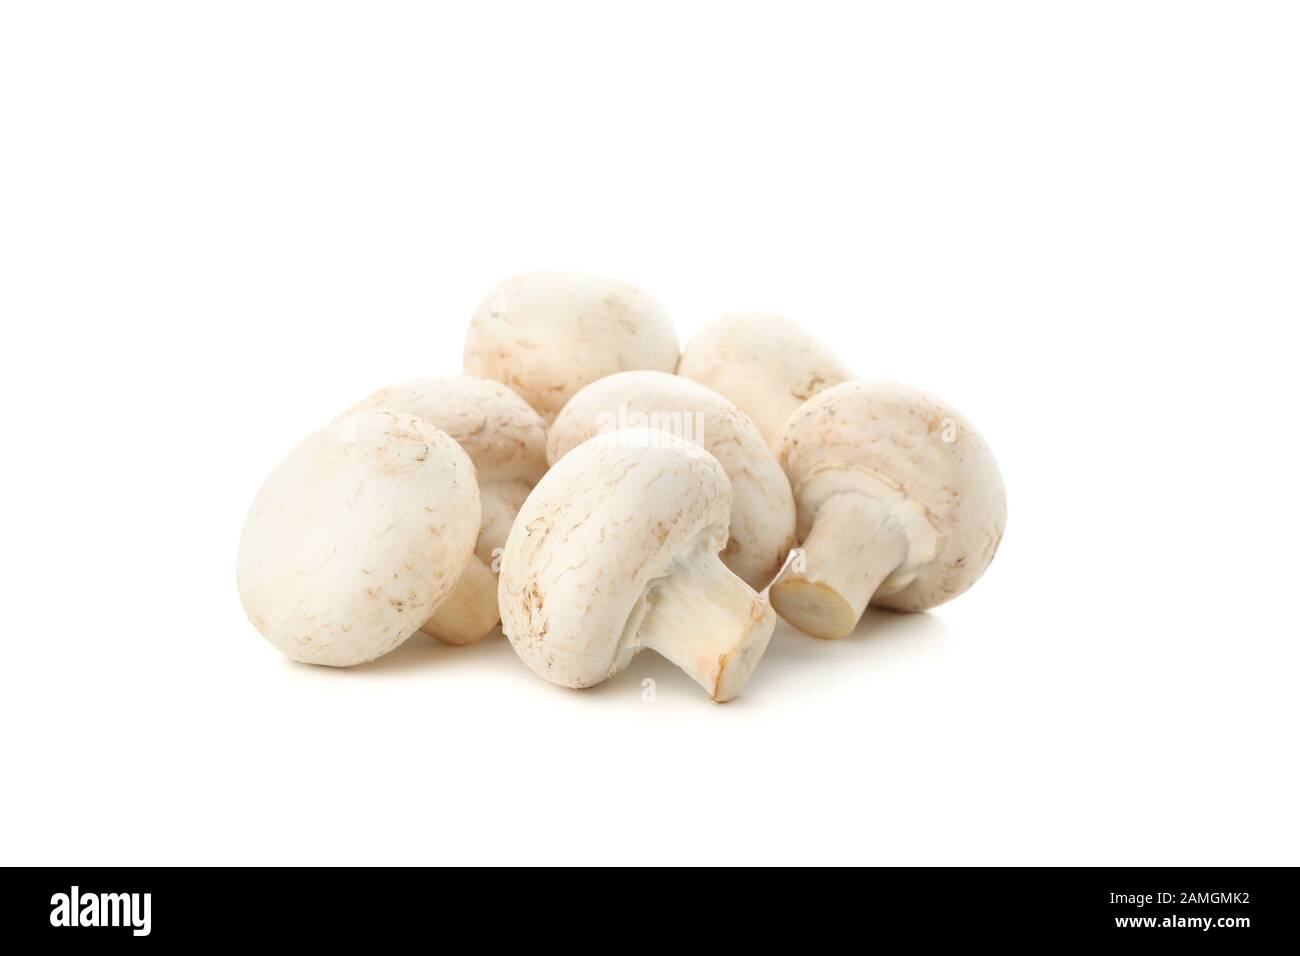 Group of champignon mushrooms isolated on white background Stock Photo